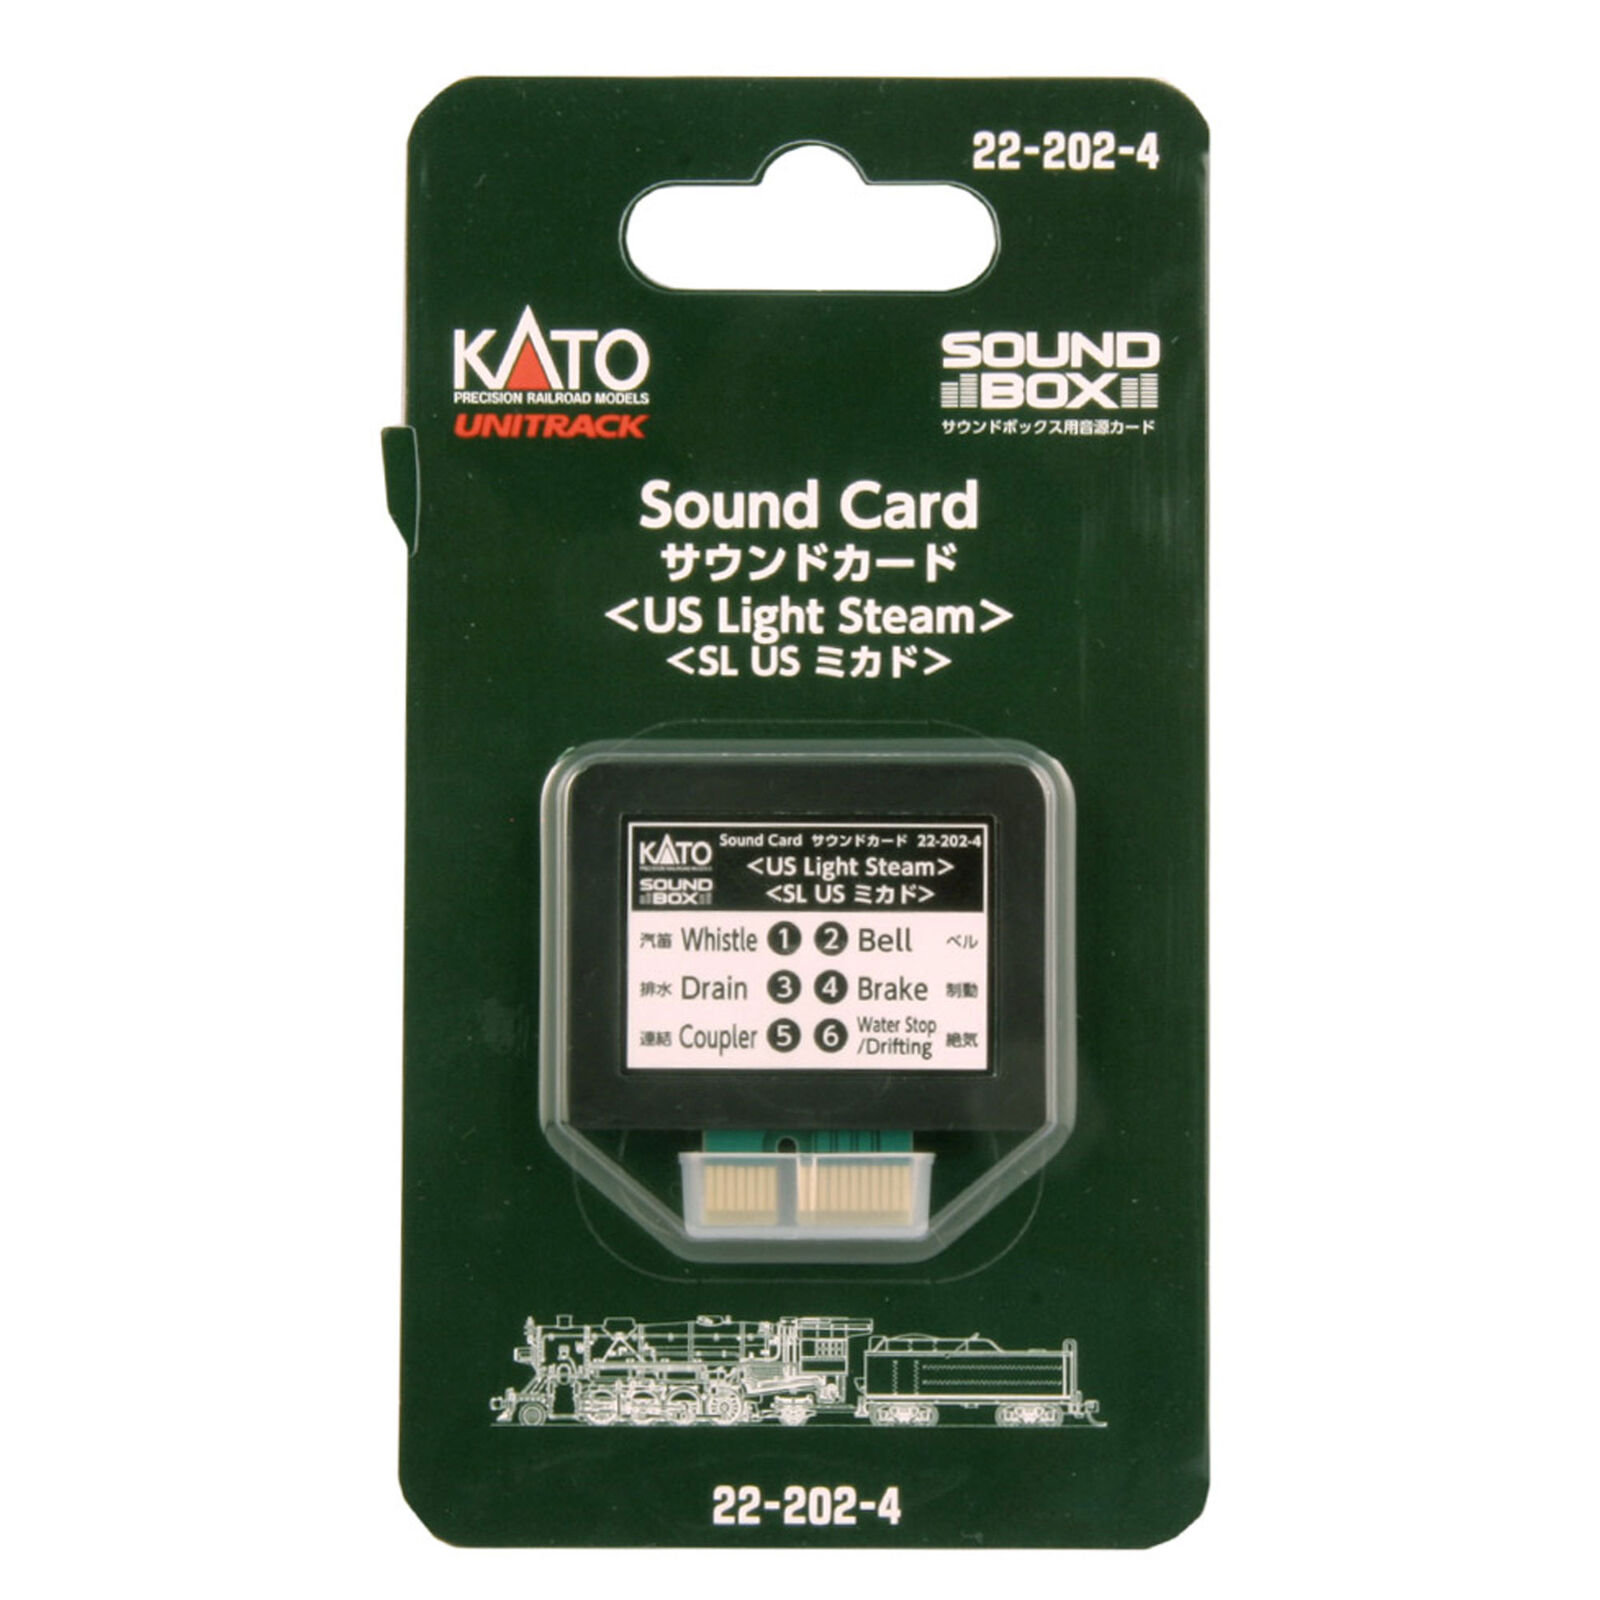 Sound Card, US Light Steam